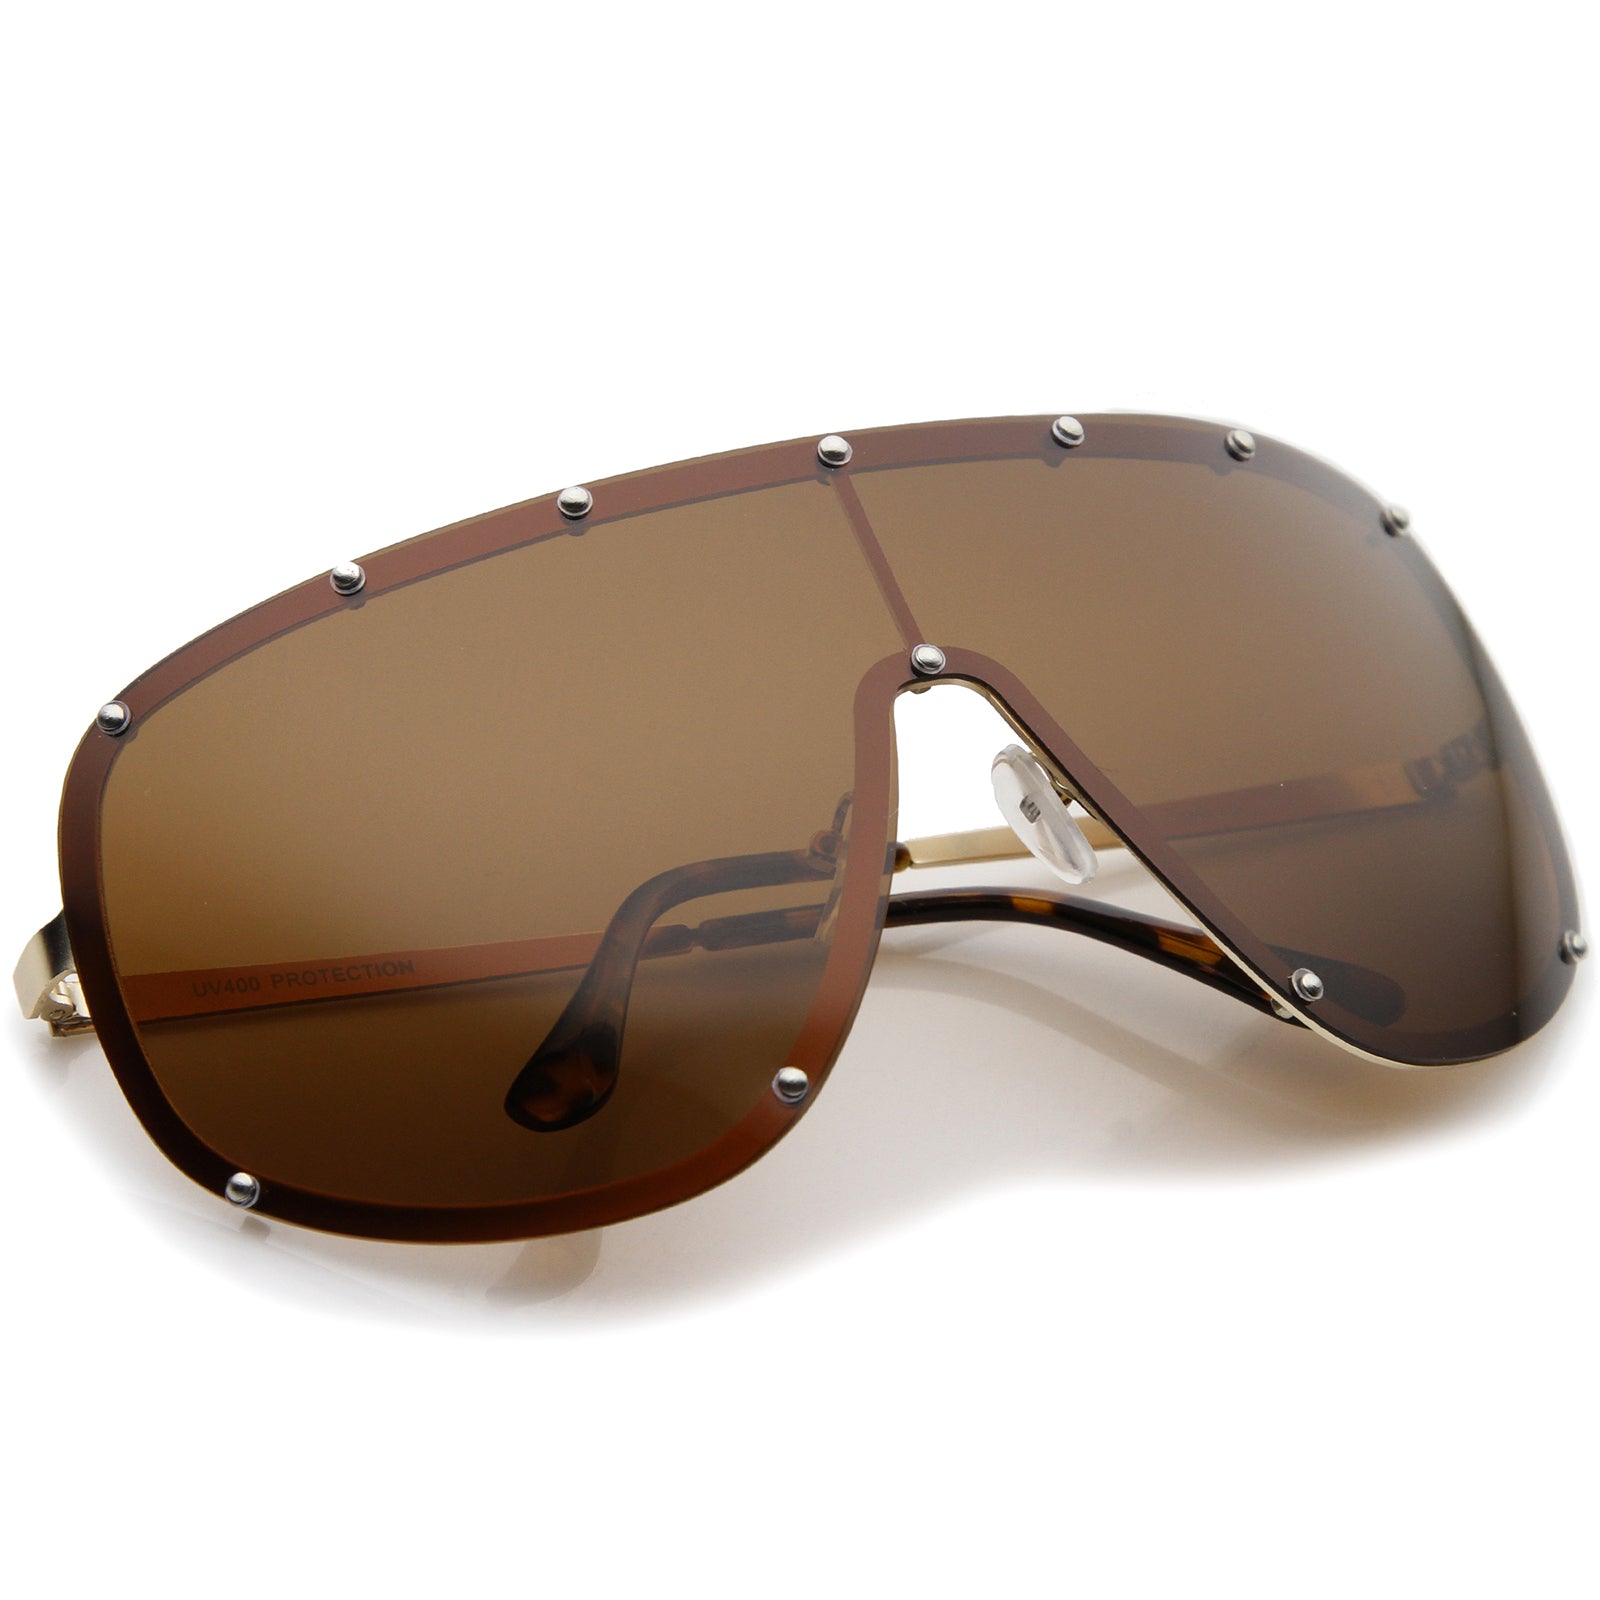 Top Gun Polarized Aviator Rivet Sunglasses